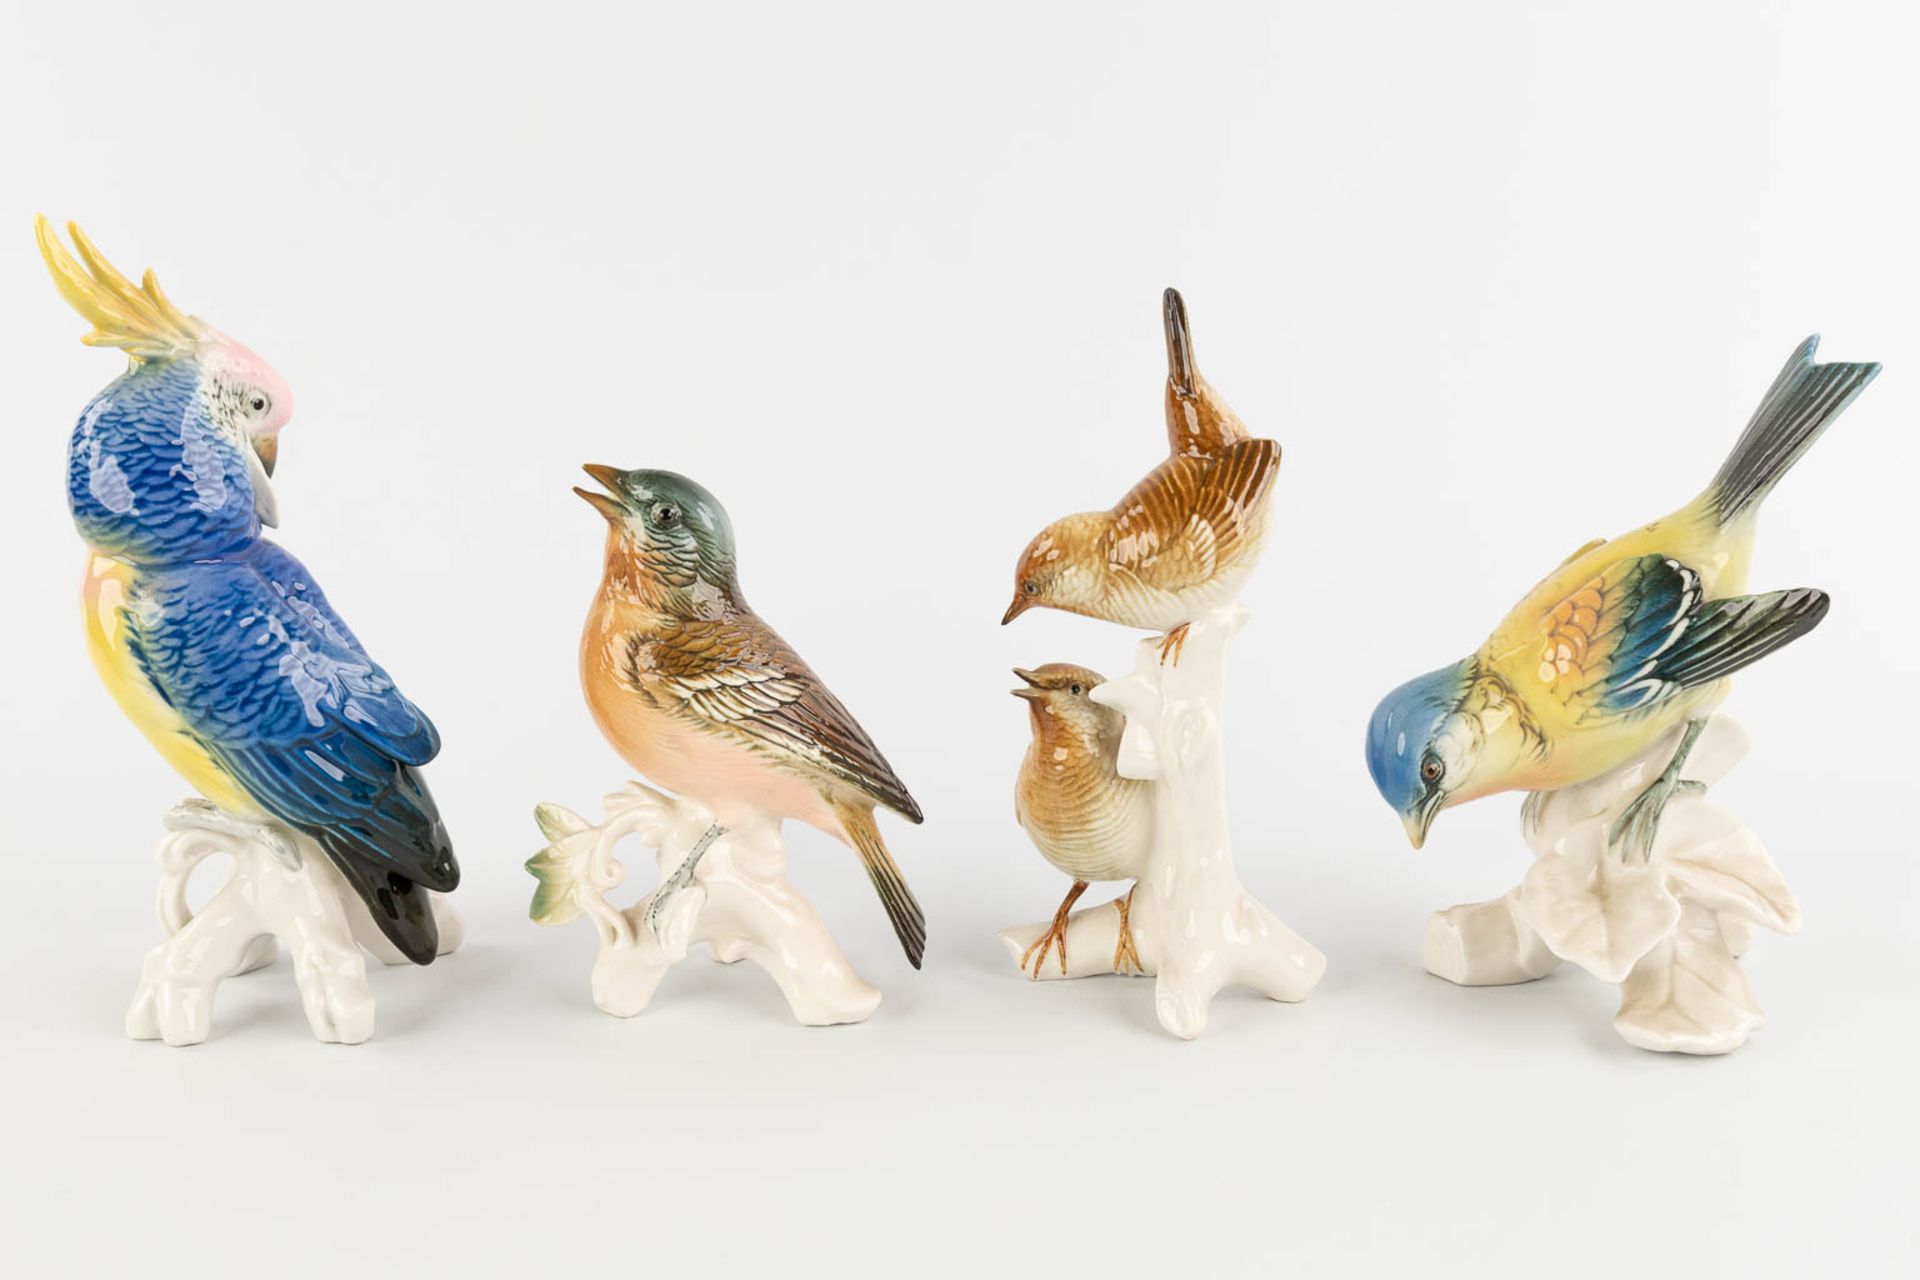 Karl ENS Porzellan, 8 birds, polychrome porcelain. 20th C. (H:19 cm) - Image 5 of 15